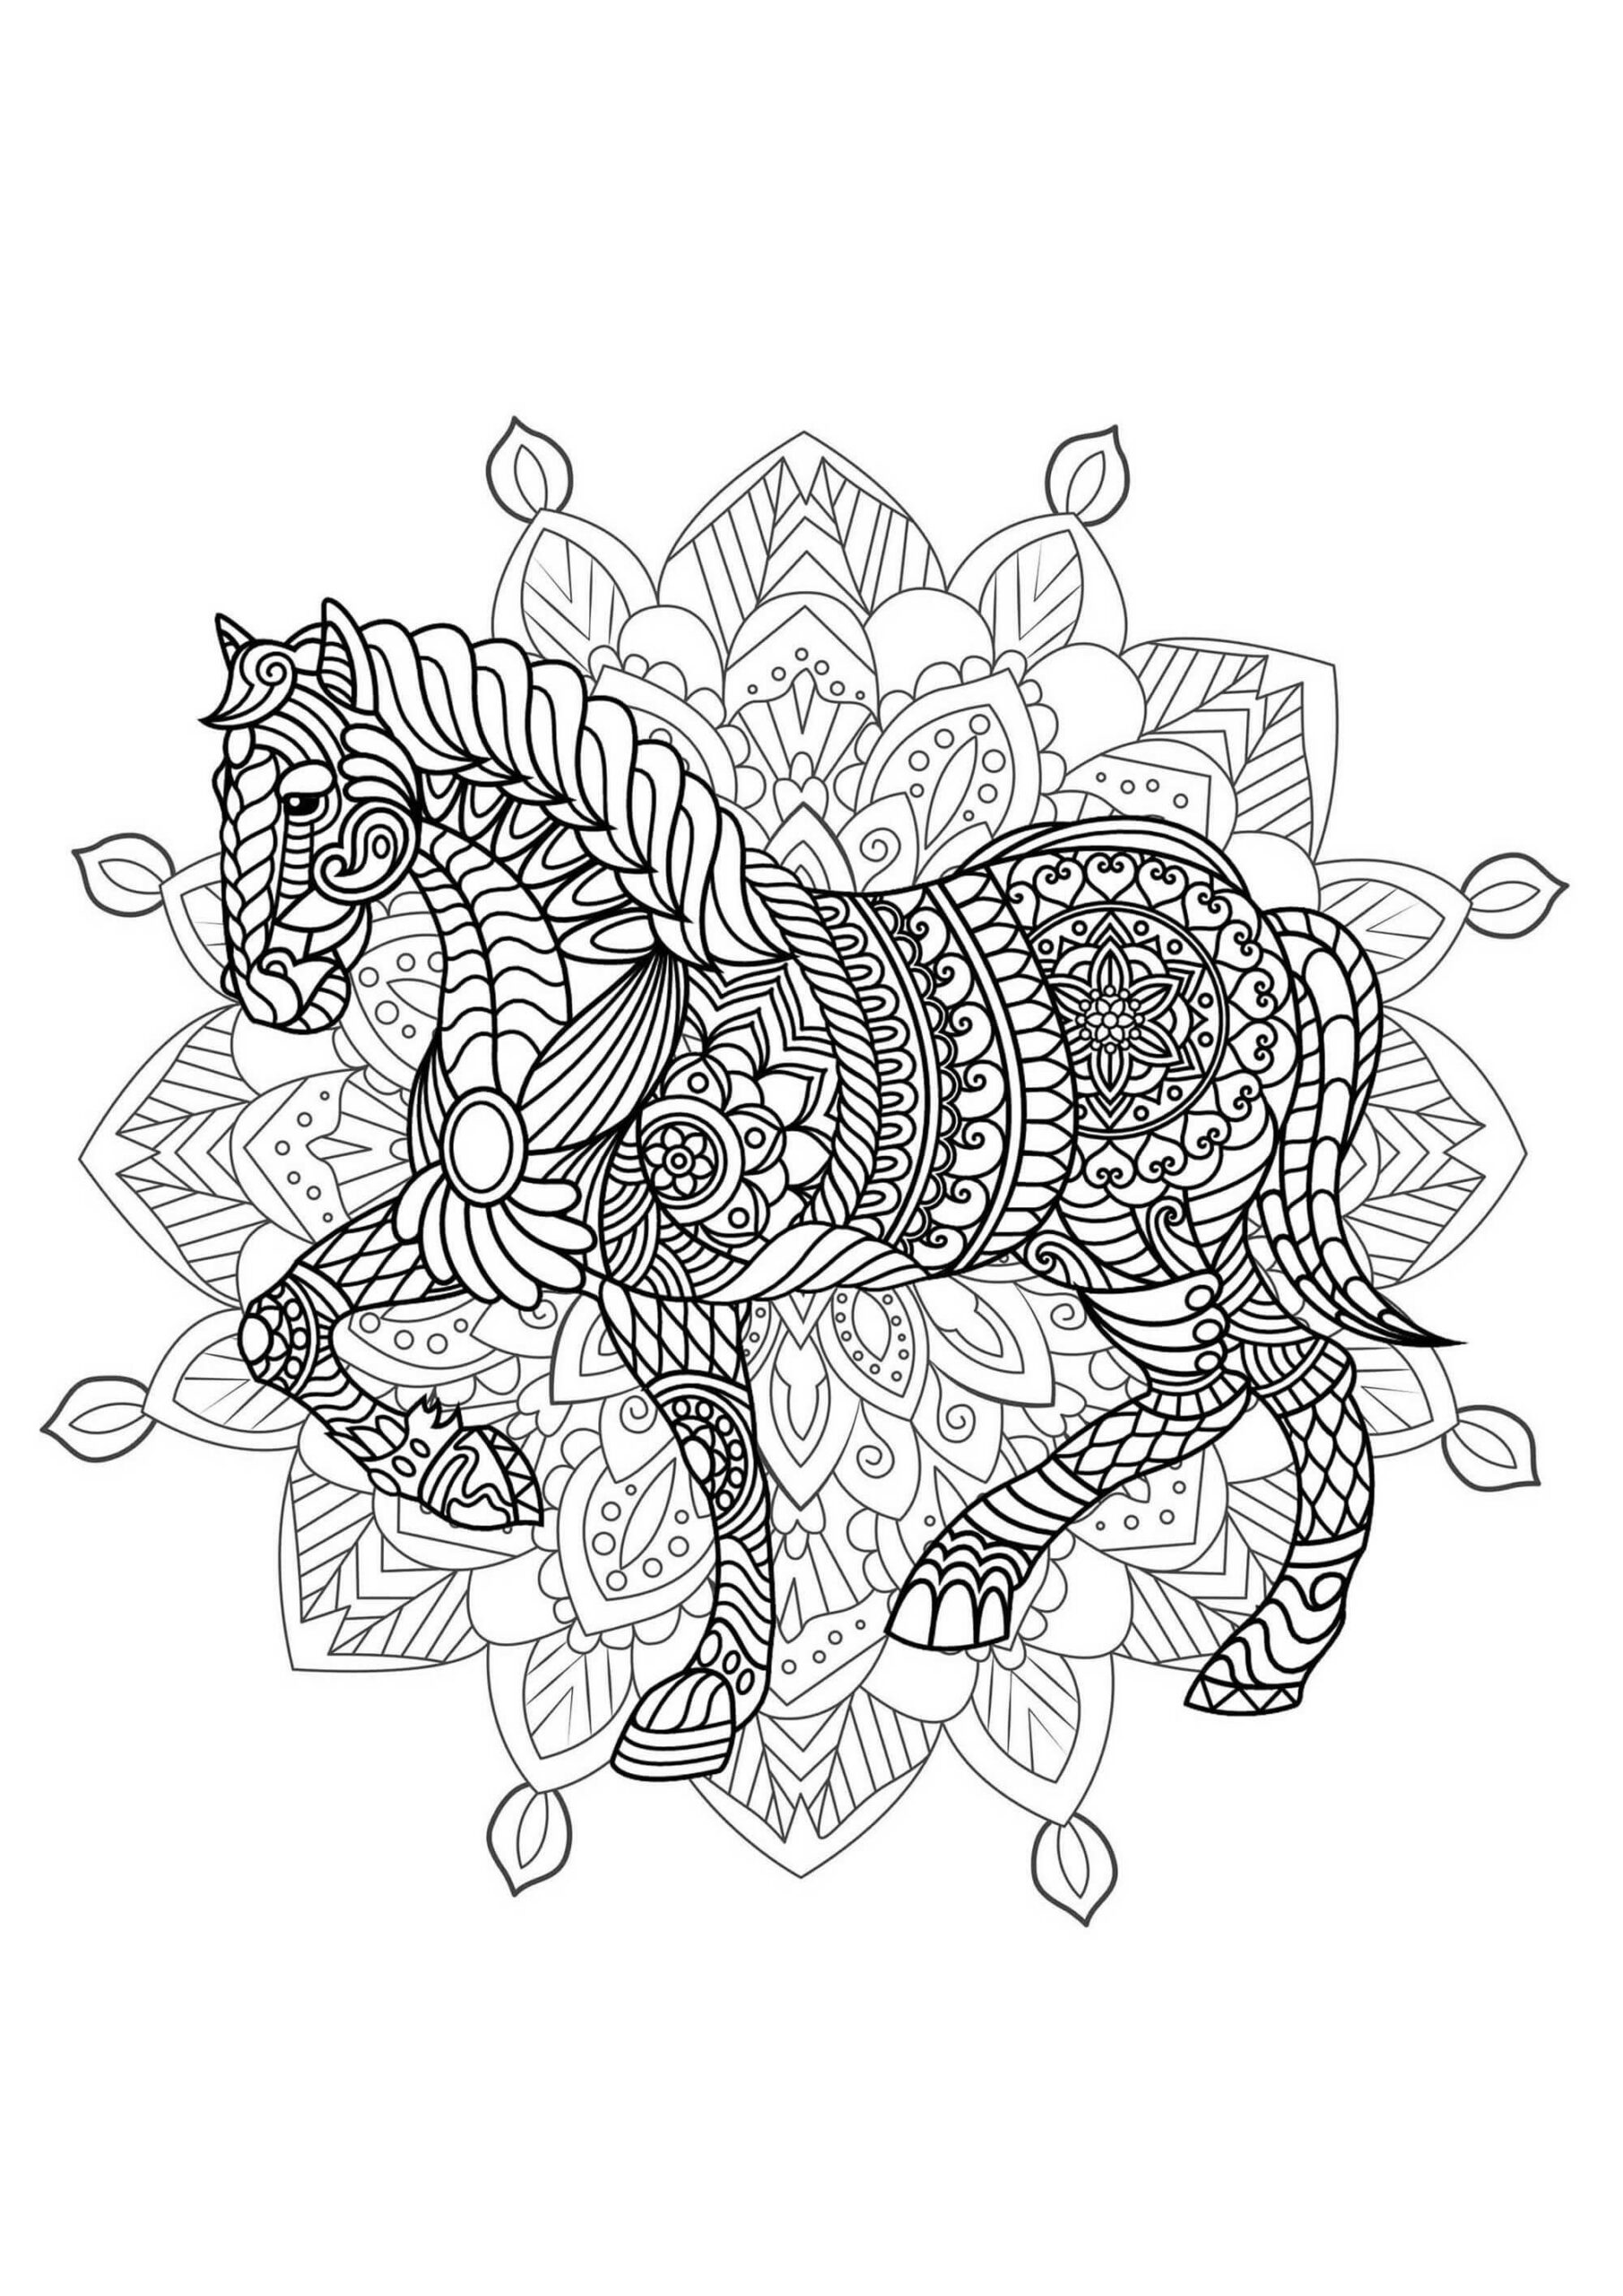 Mandala Horse Coloring Page – Sheet 4 Mandalas